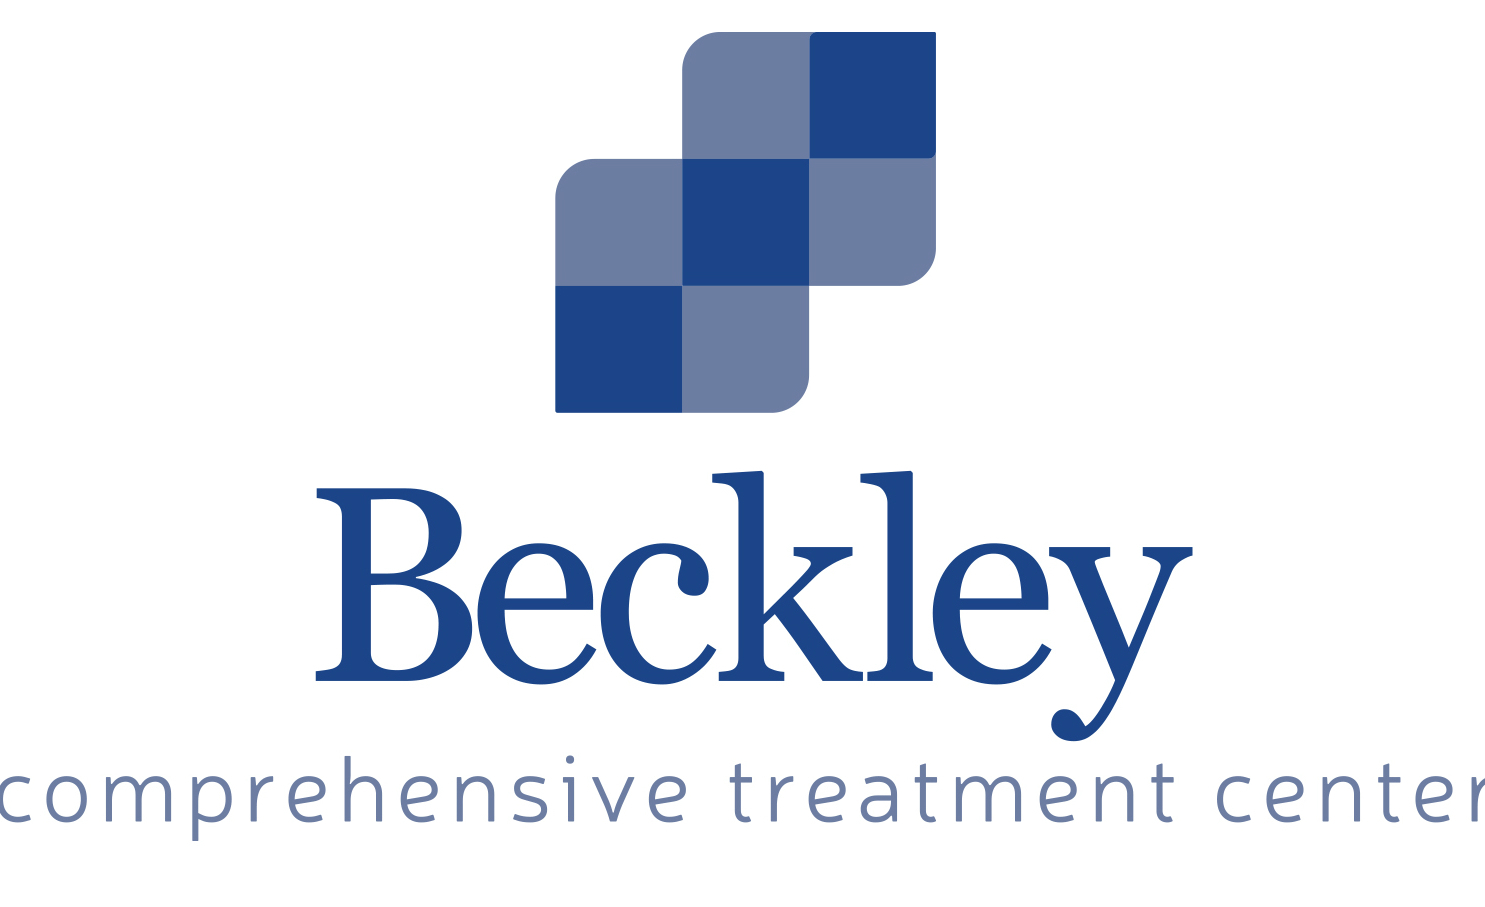 Beckley Treatment Center Beaver WV